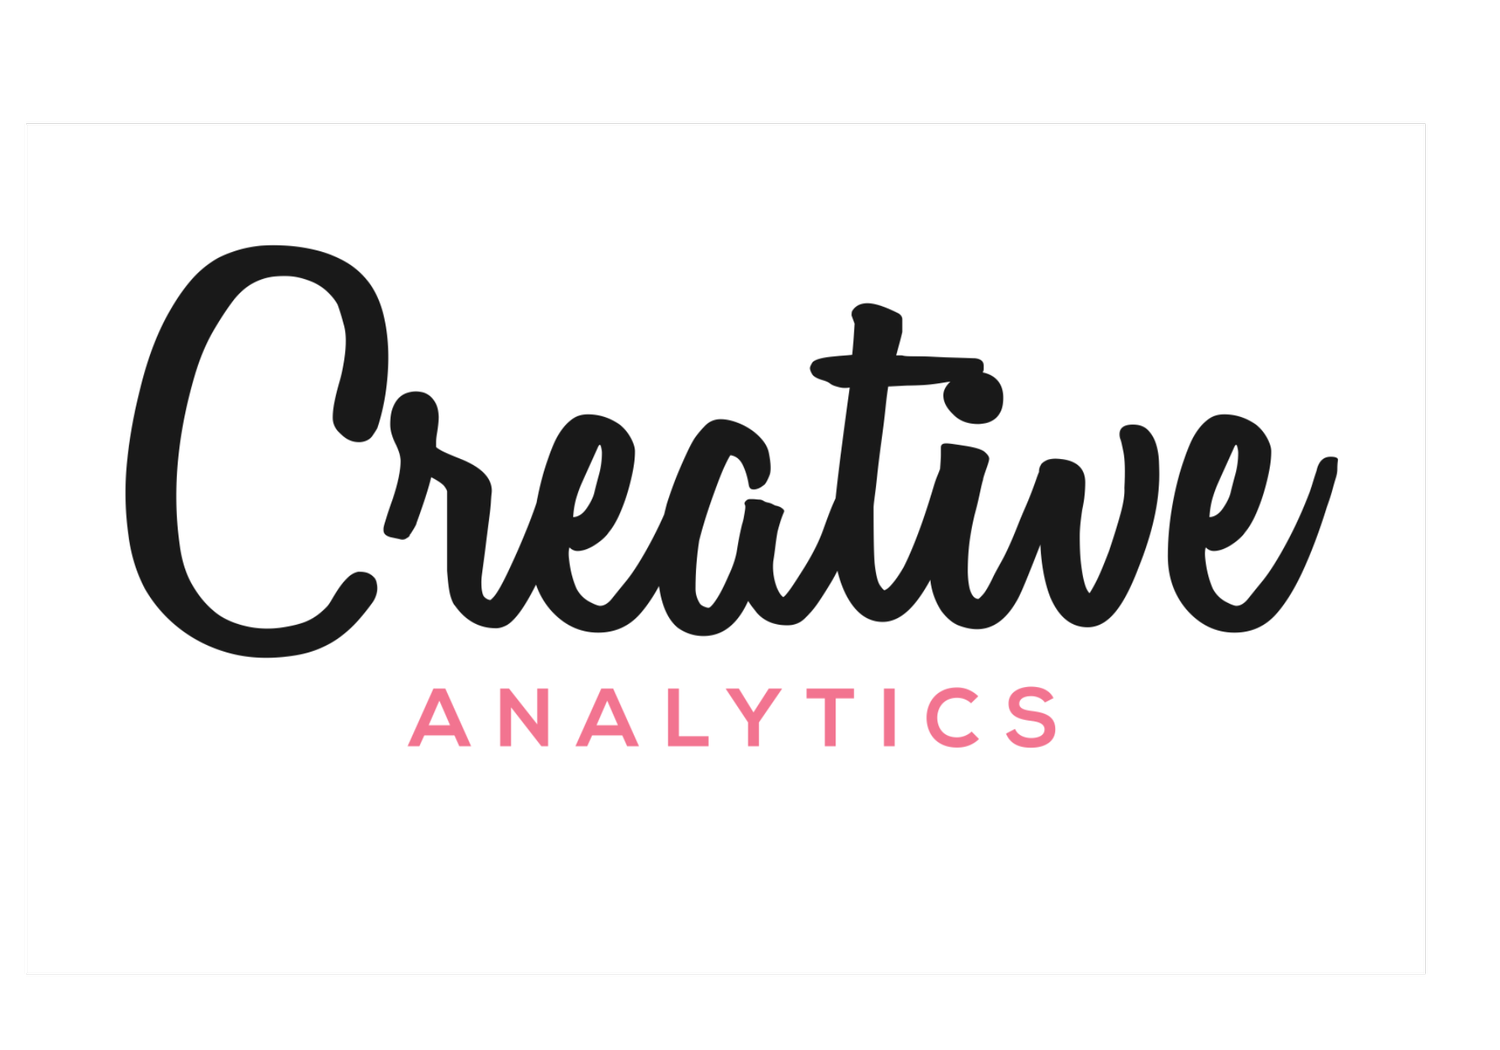 Creative Analytics 